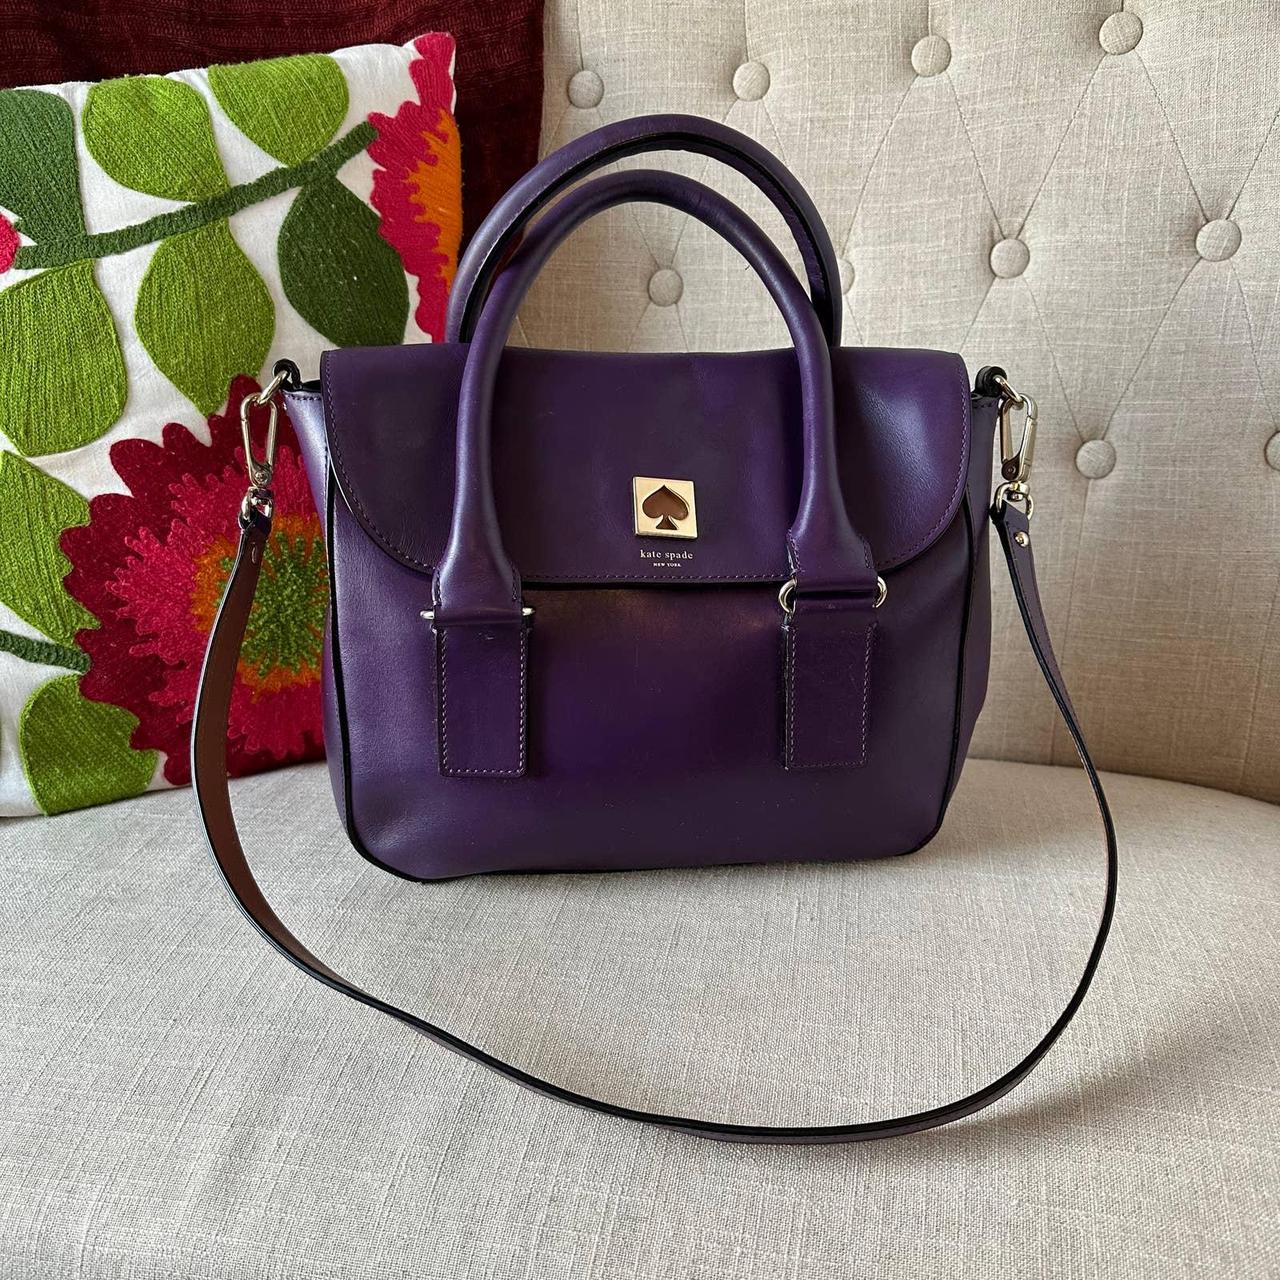 Kate Spade New York Women's Purple and Tan Bag | Depop